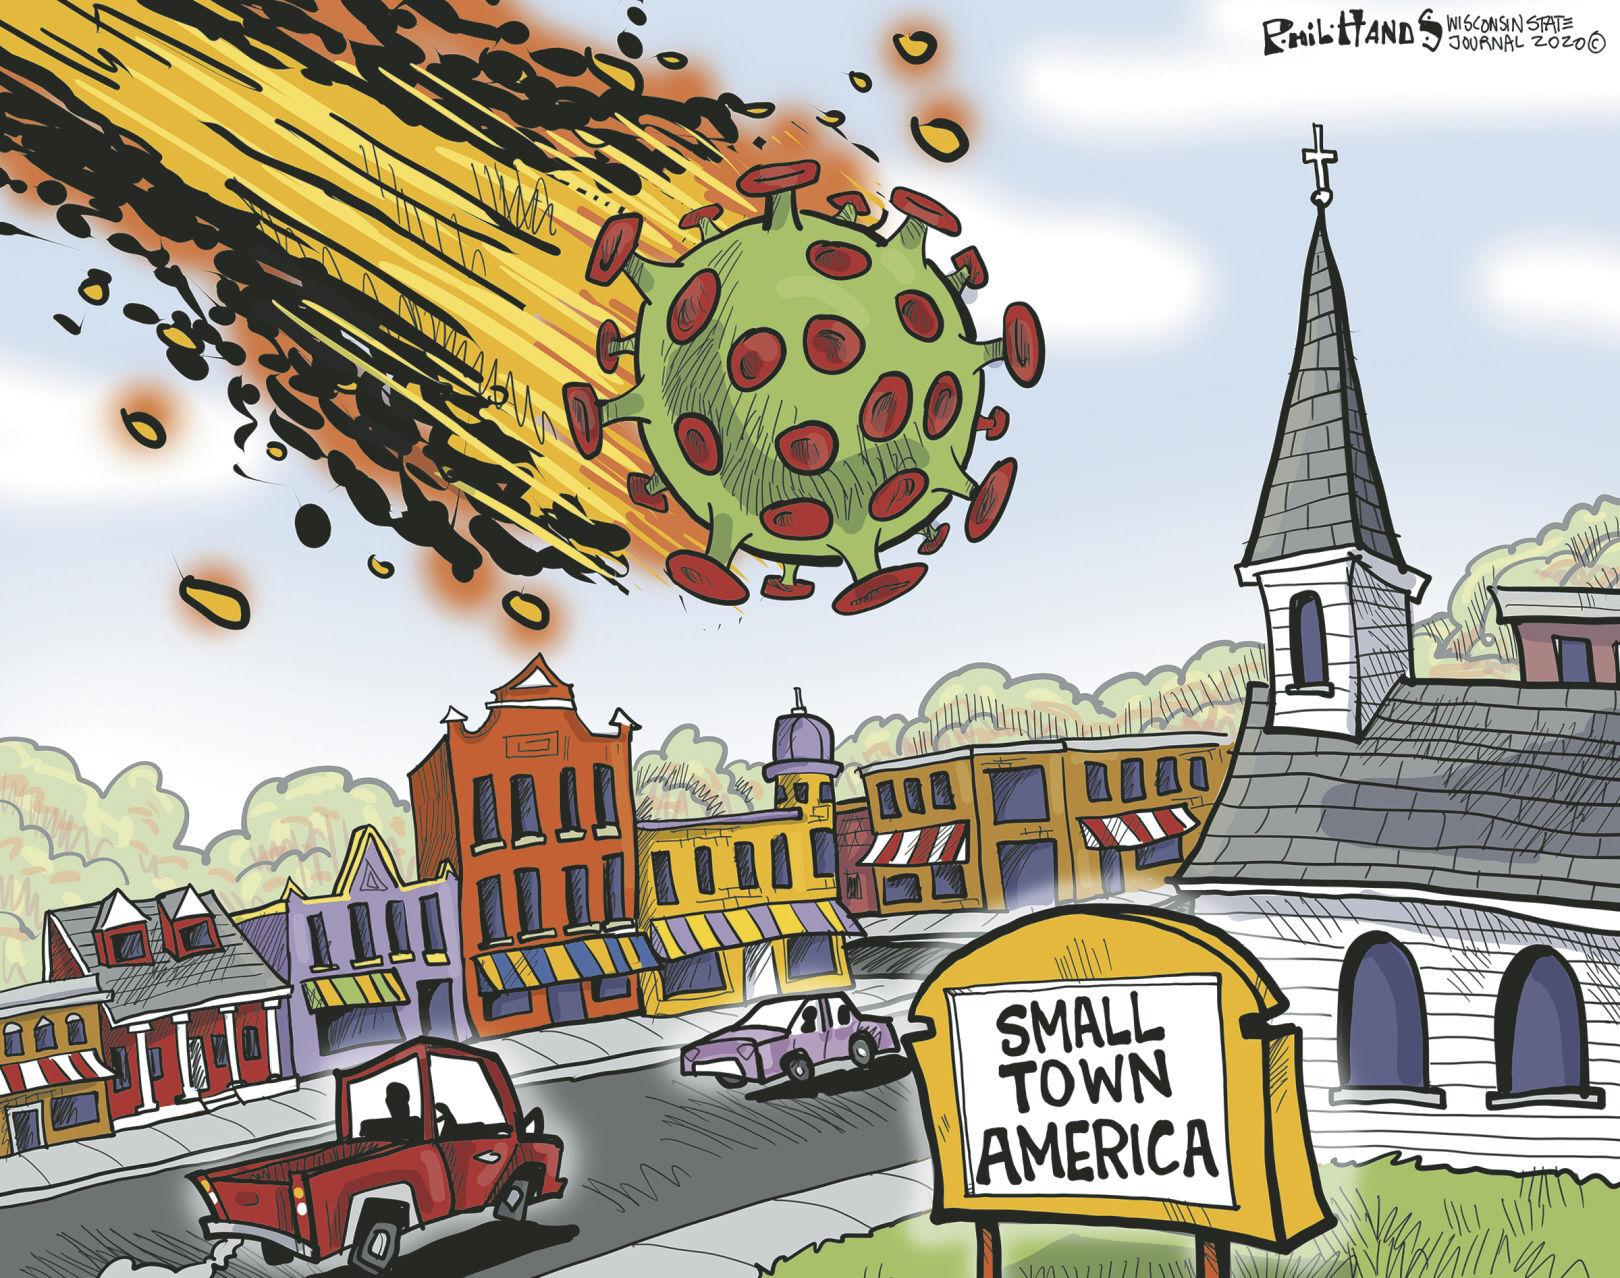 The coronavirus meteor hitting a small town in America